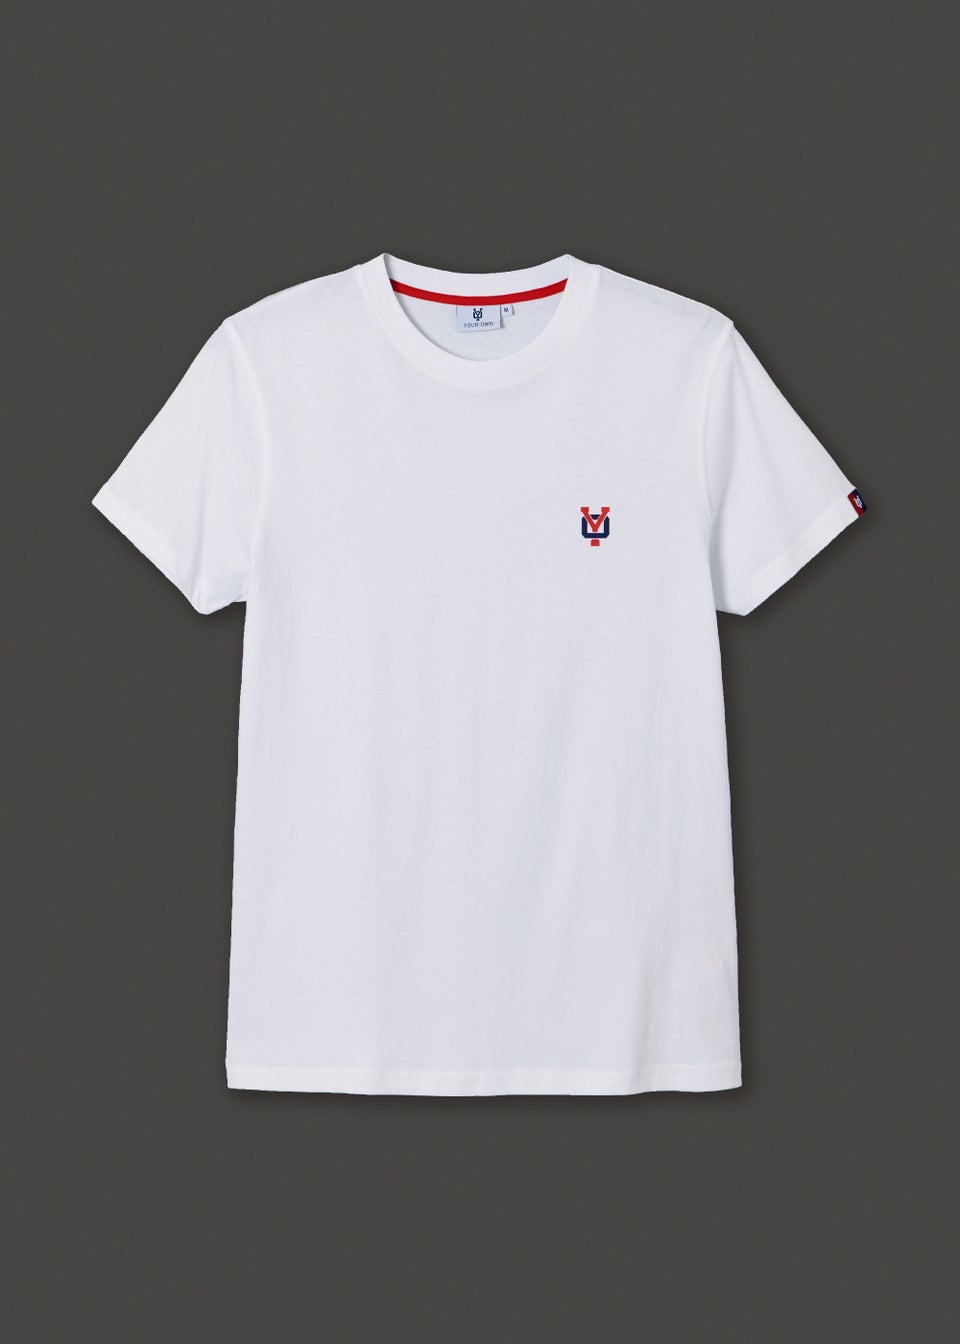 Y.O. White Chest Print T-Shirt